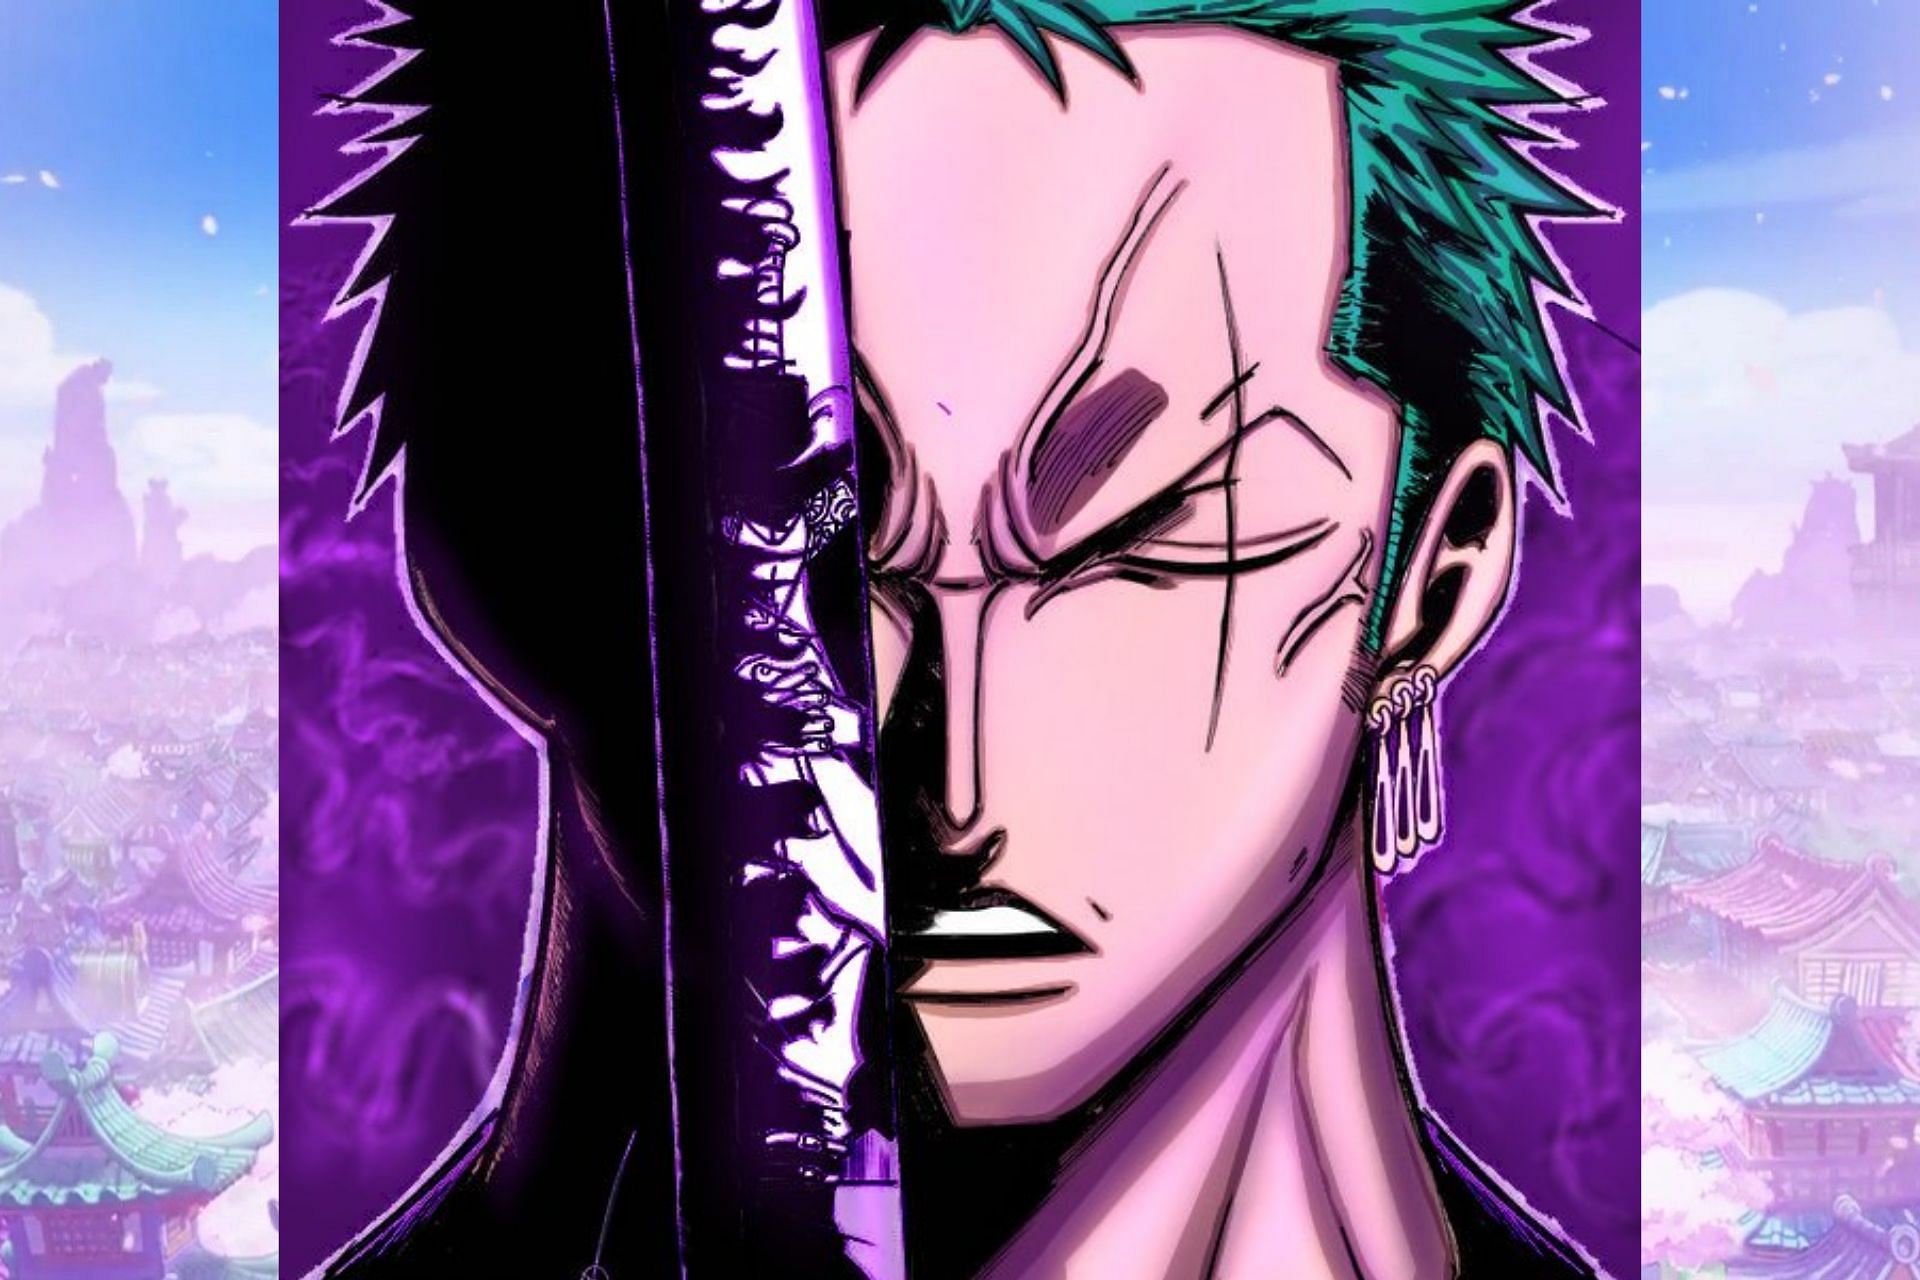 Fanart of Zoro, with his purple Armament Haki aura surrounding him (Image via Sportskeeda)